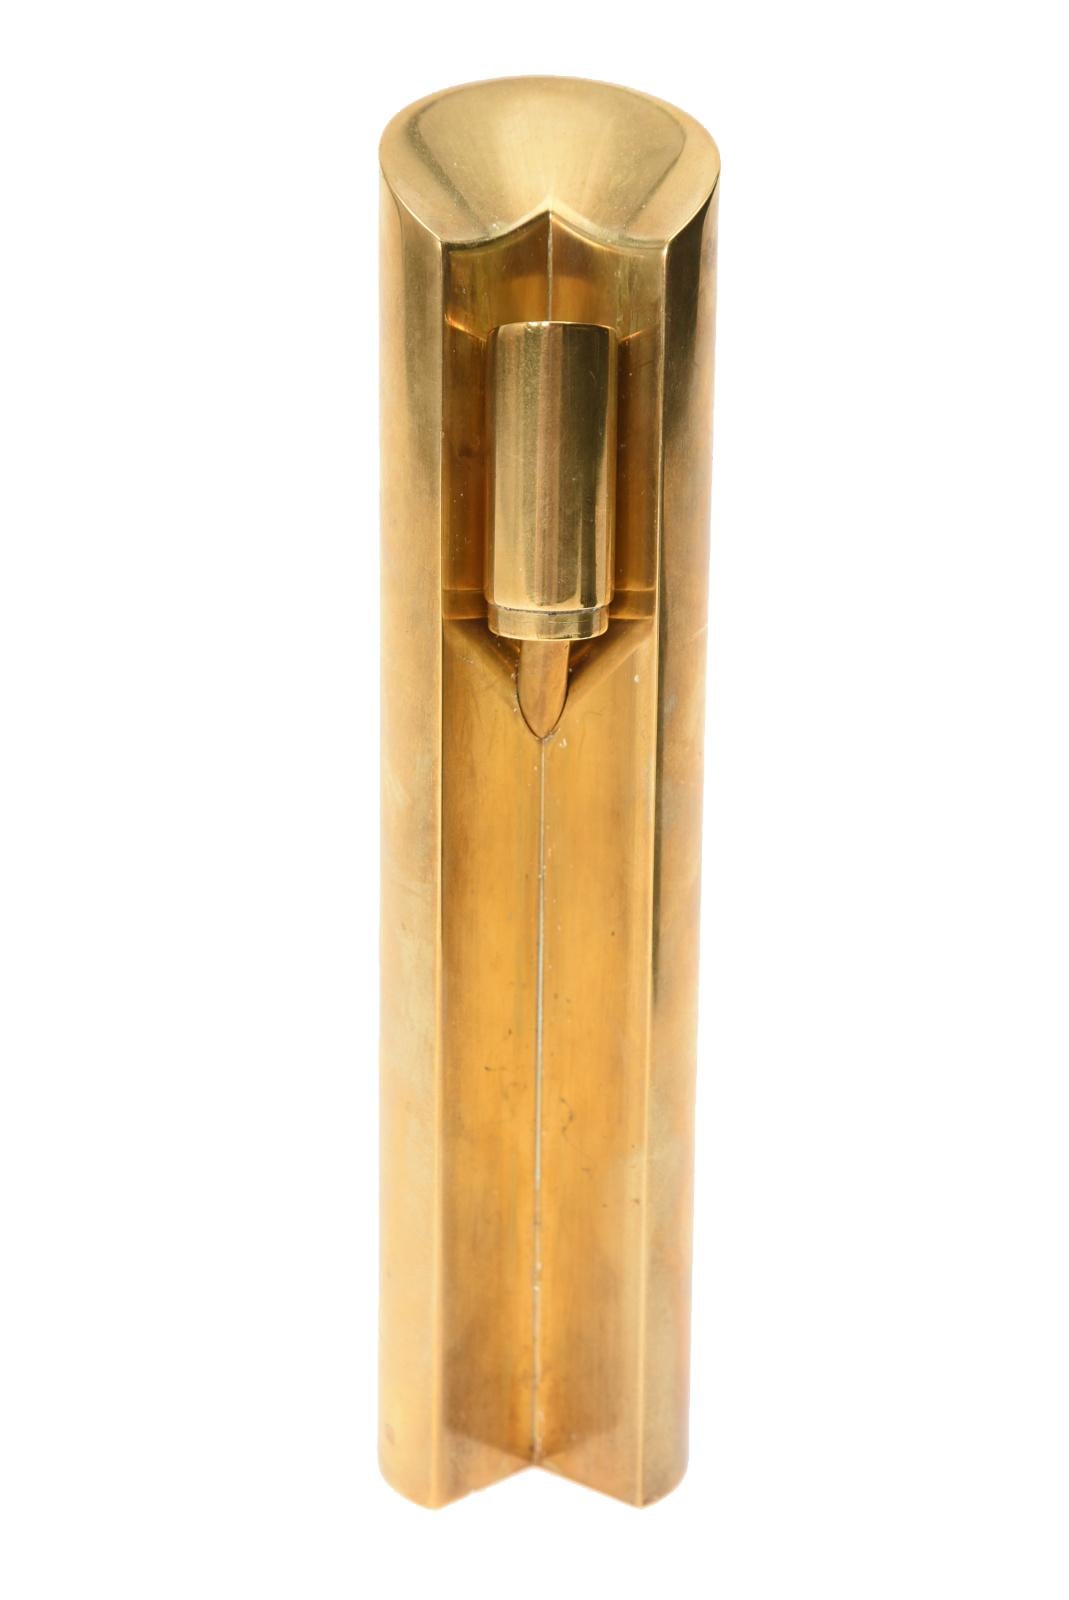 A Pair of Pierre Forssell Adjustable Candleholder, Model Variation, Skultuna In Good Condition For Sale In Stockholm, SE